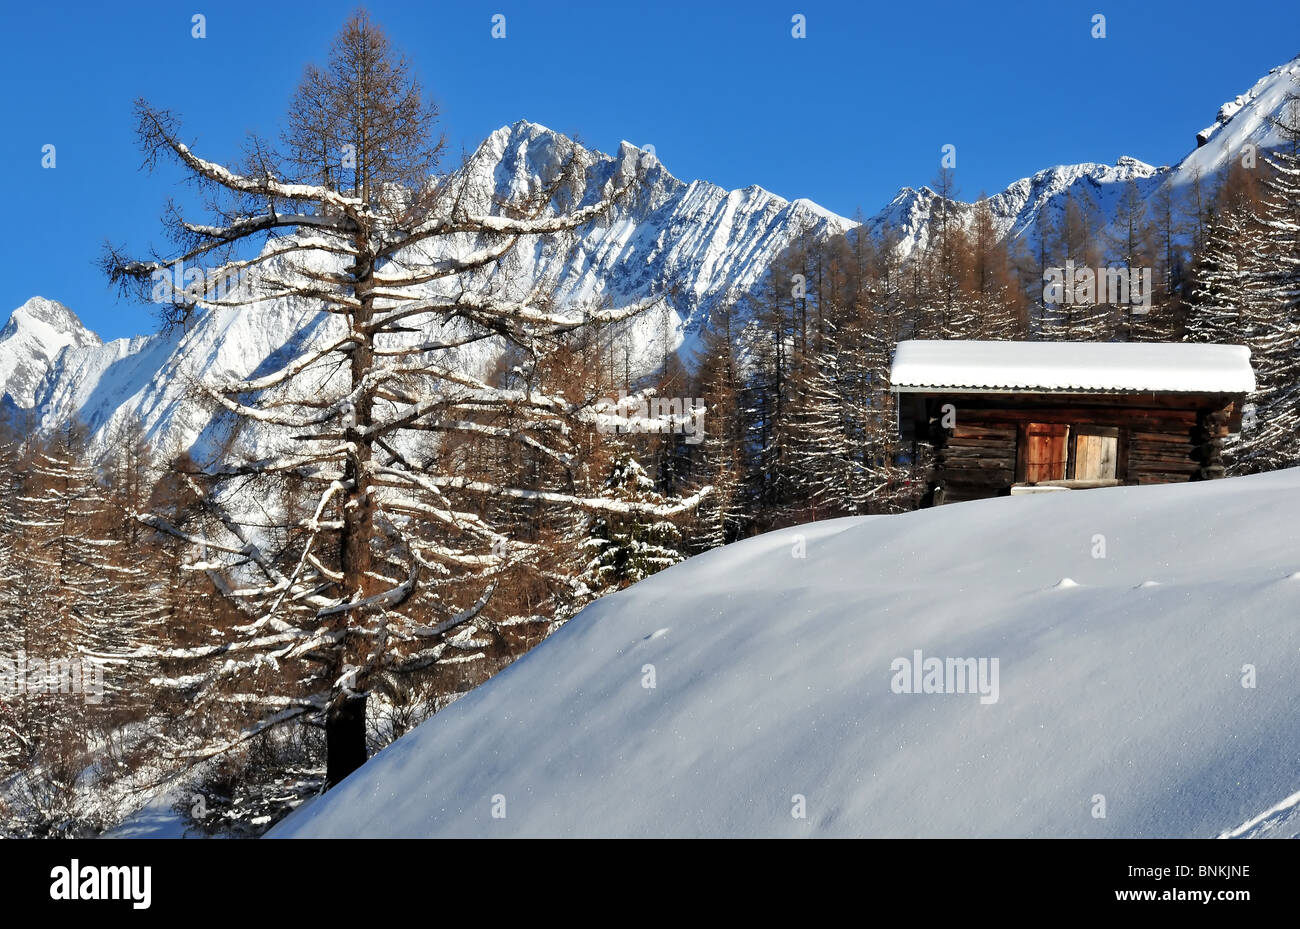 Switzerland Valais Blatter snow larch winter mountains Alps hut building construction glitter map card Swiss scenery Stock Photo